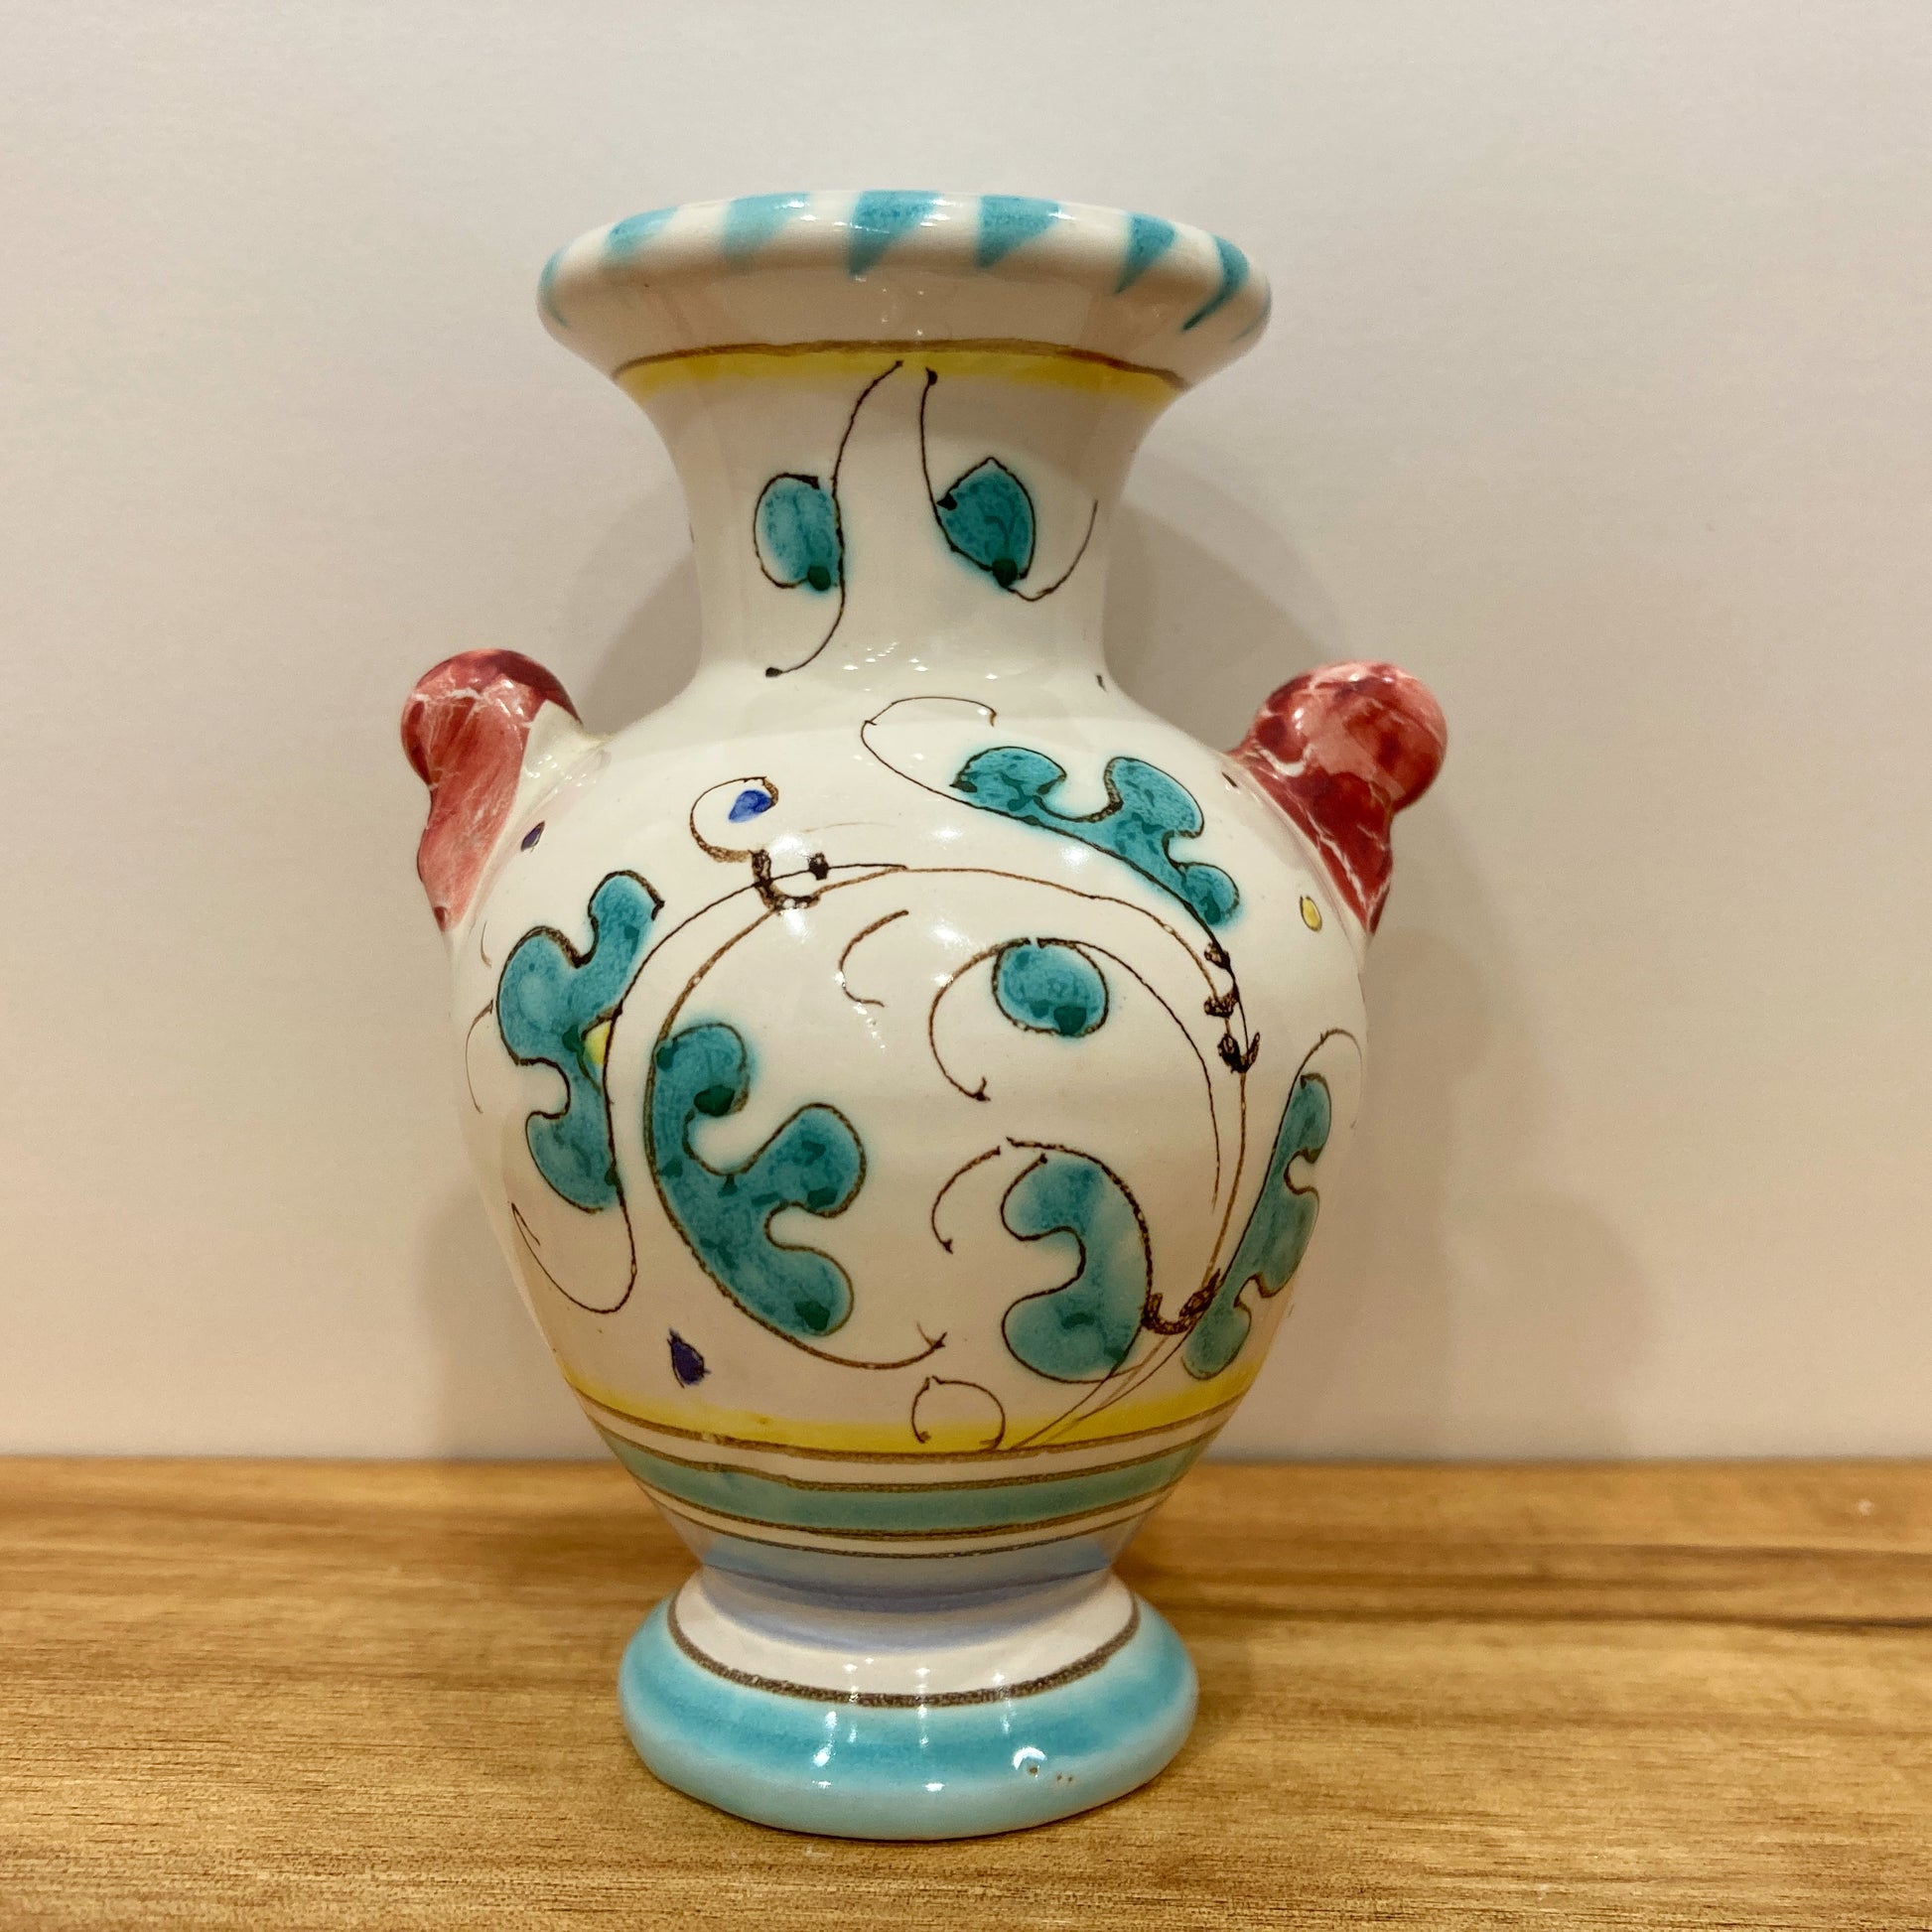 Preloved Italian Majolica Ceramic Green Rooster Small Vase Ornament at Piccola Italian Gifts Sydney